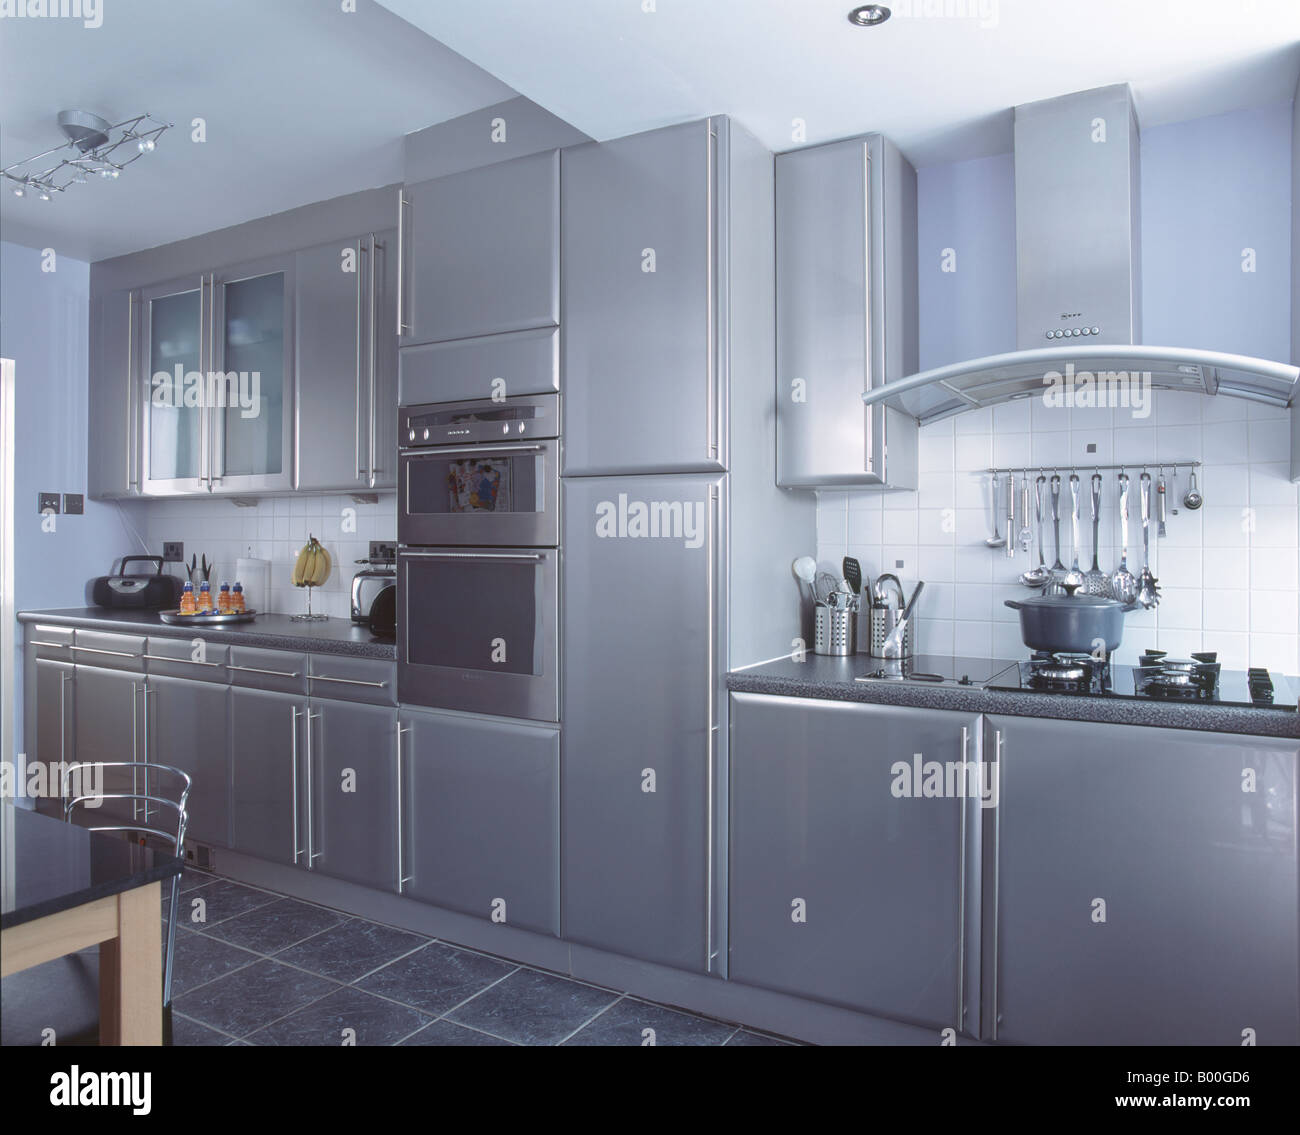 Wall Mounted Oven In Modern Metallic Grey Kitchen With Slate Floor